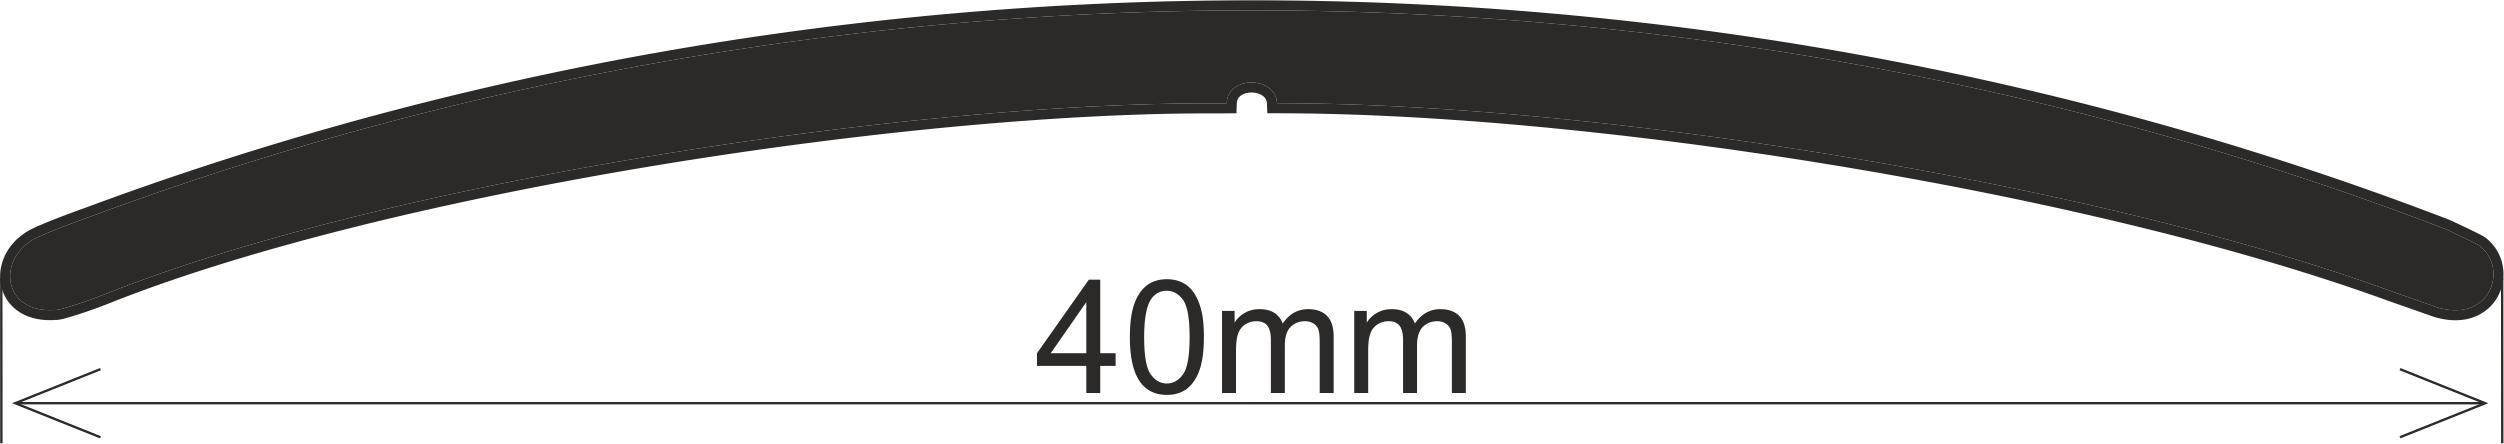 Bohemia profil pechodov lita samolepc 40mm pvc flie BL 90cm